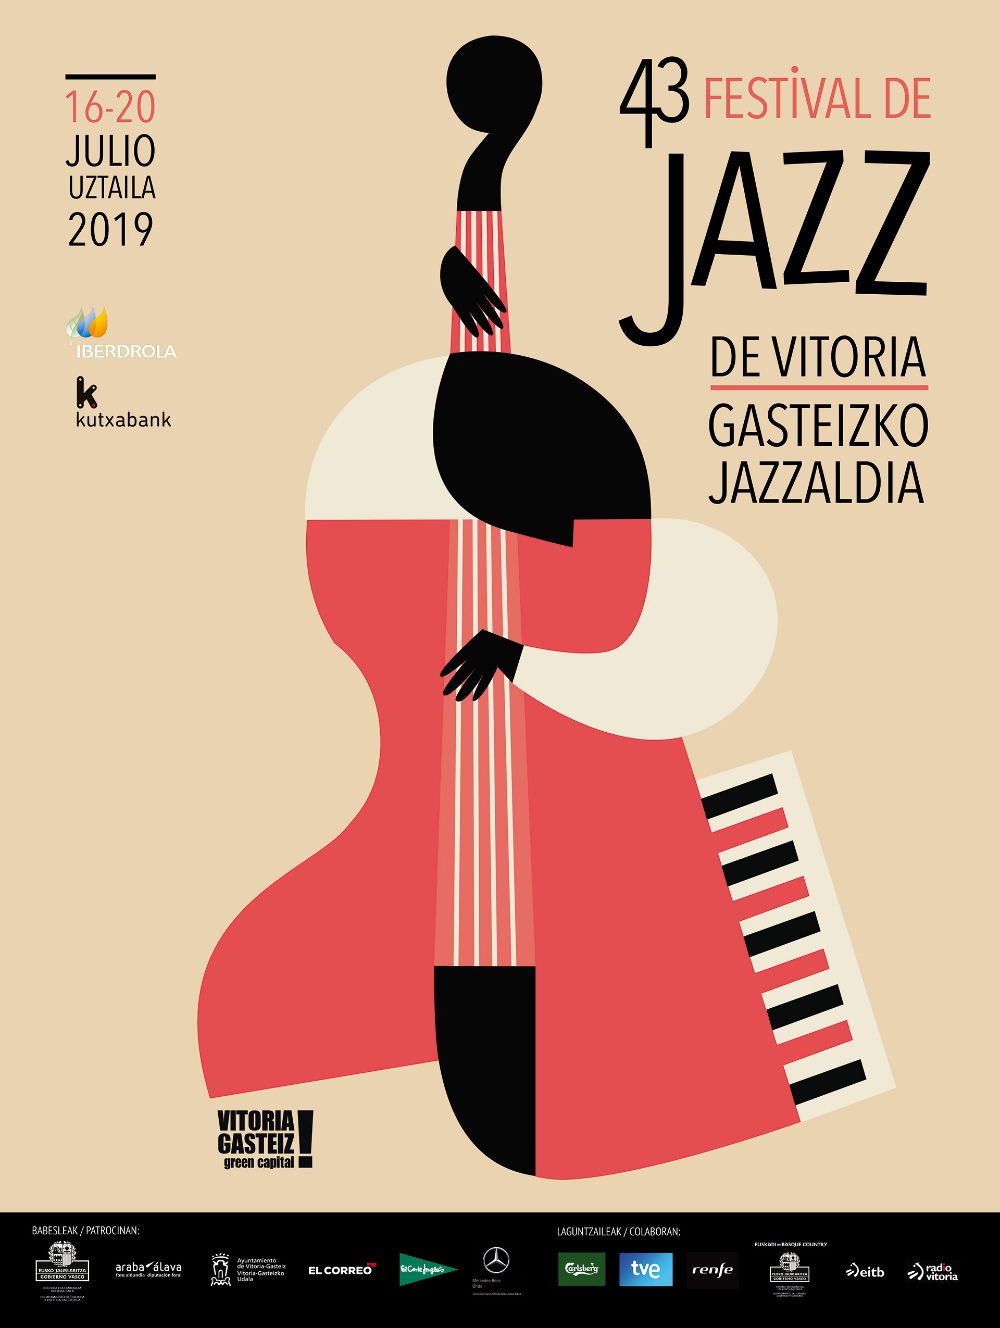 5.3 Studio Graphique - Vitoria Gasteiz Jazz Festivali - İllustrasyon